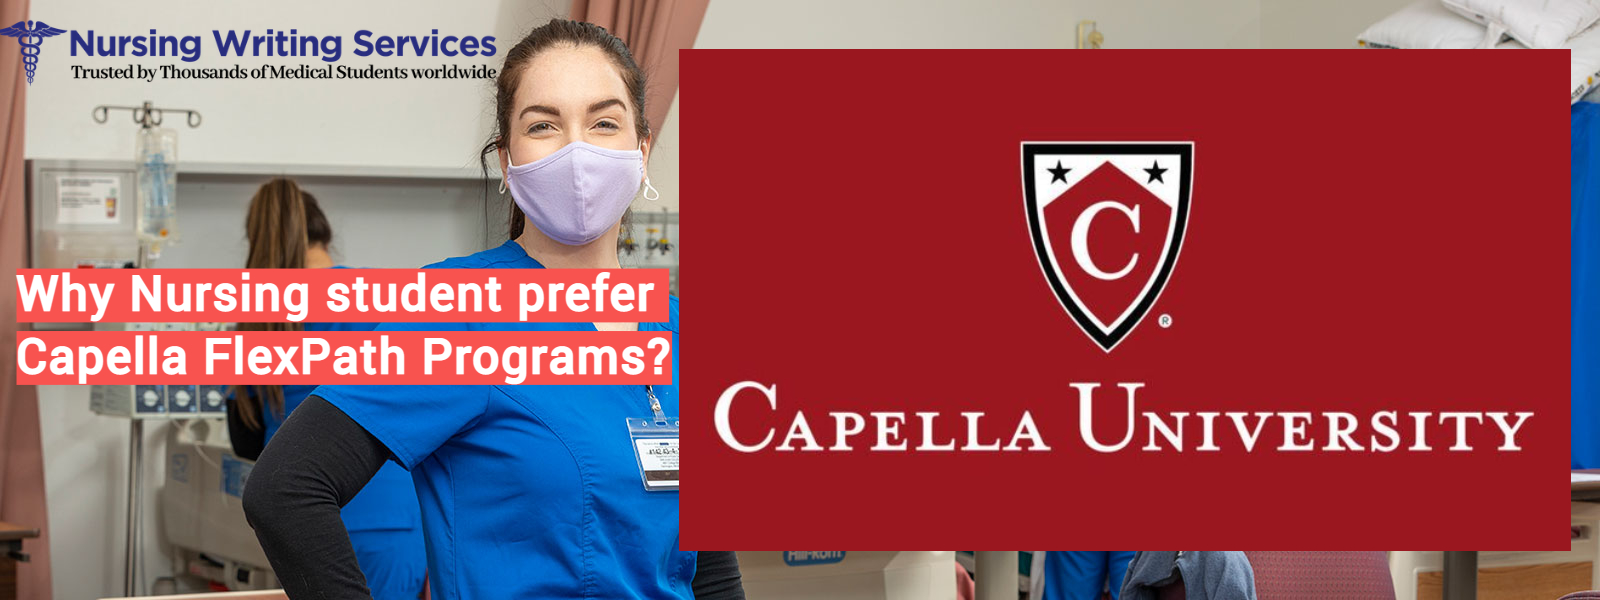 Why Nursing student prefer Capella FlexPath Programs?